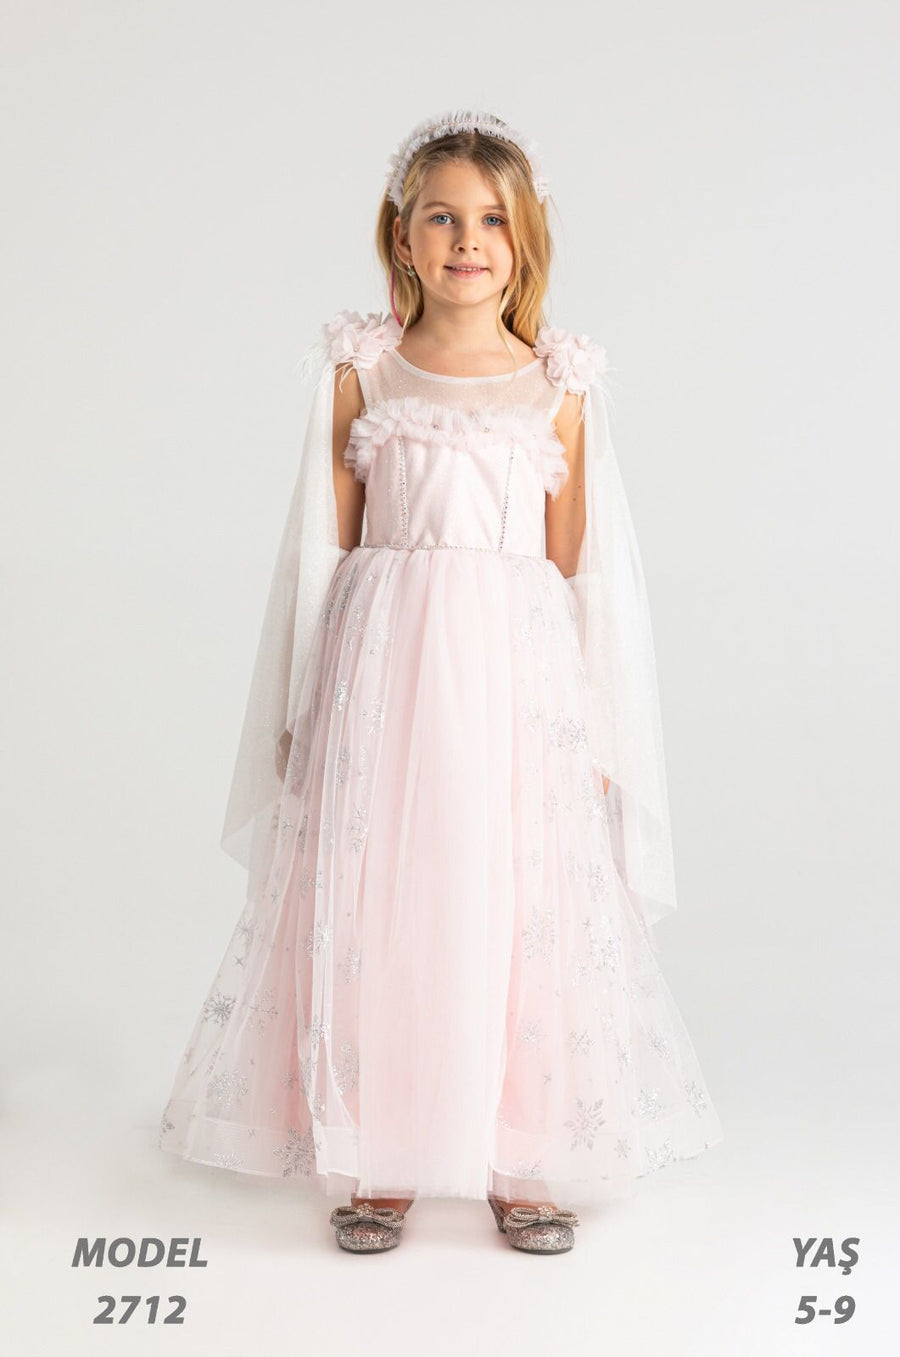 Lovely Pink Dress 2712